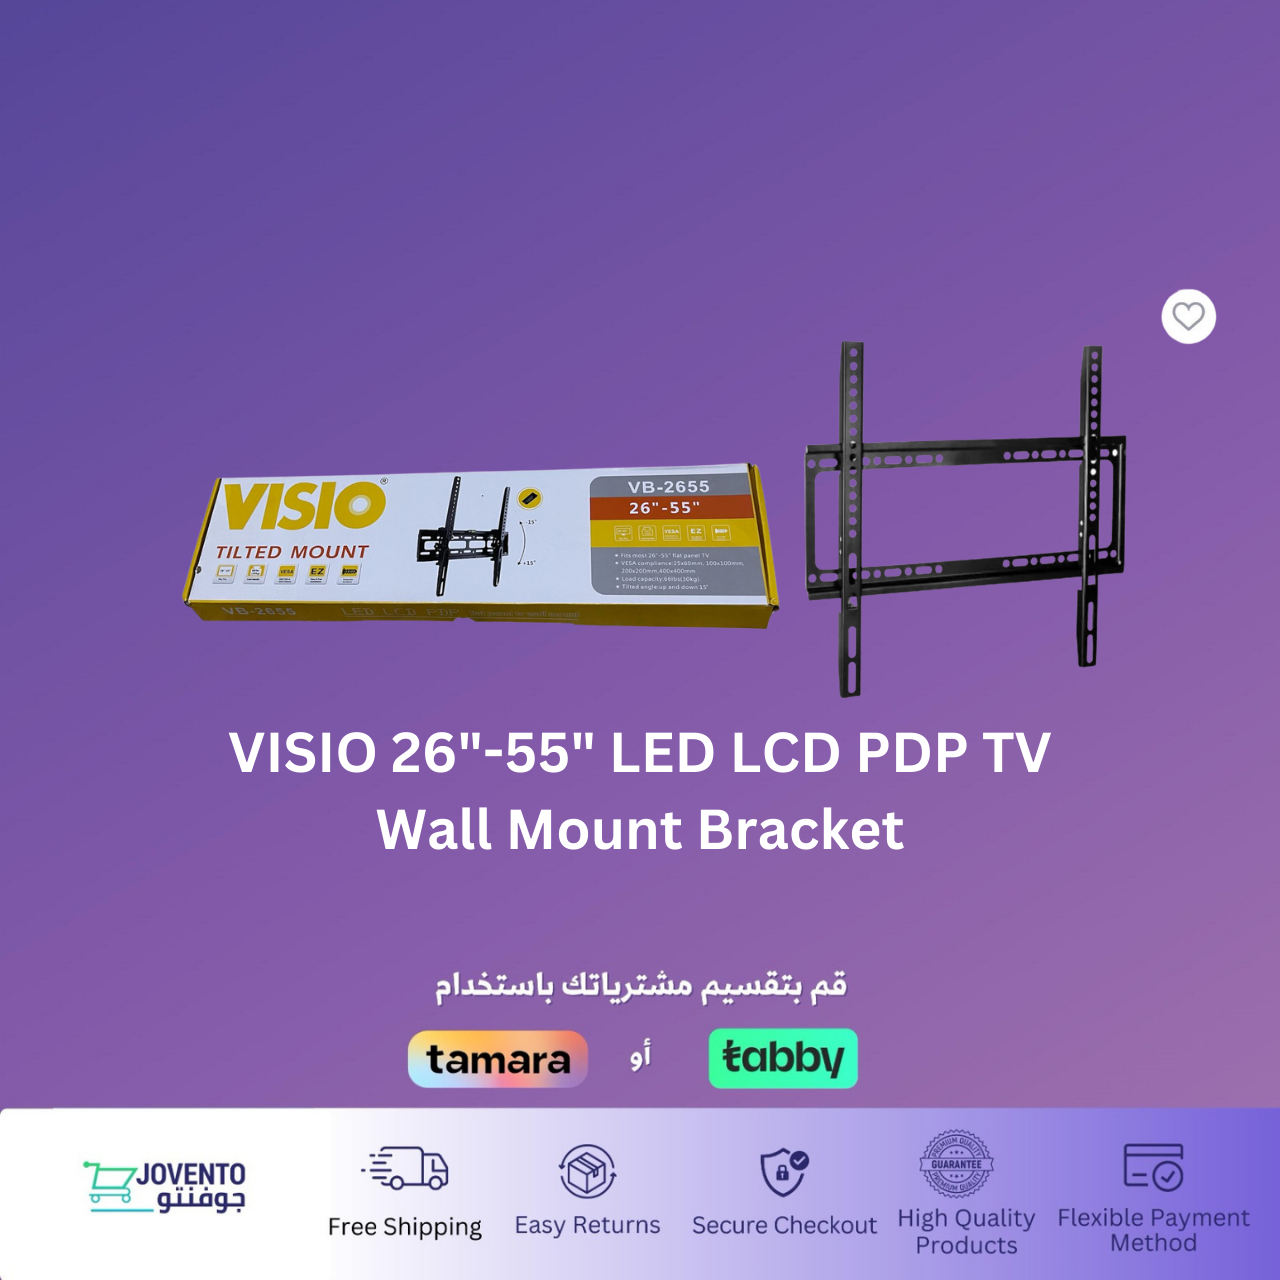 VISIO 26"-55" Flat Panel TV Wall Mount